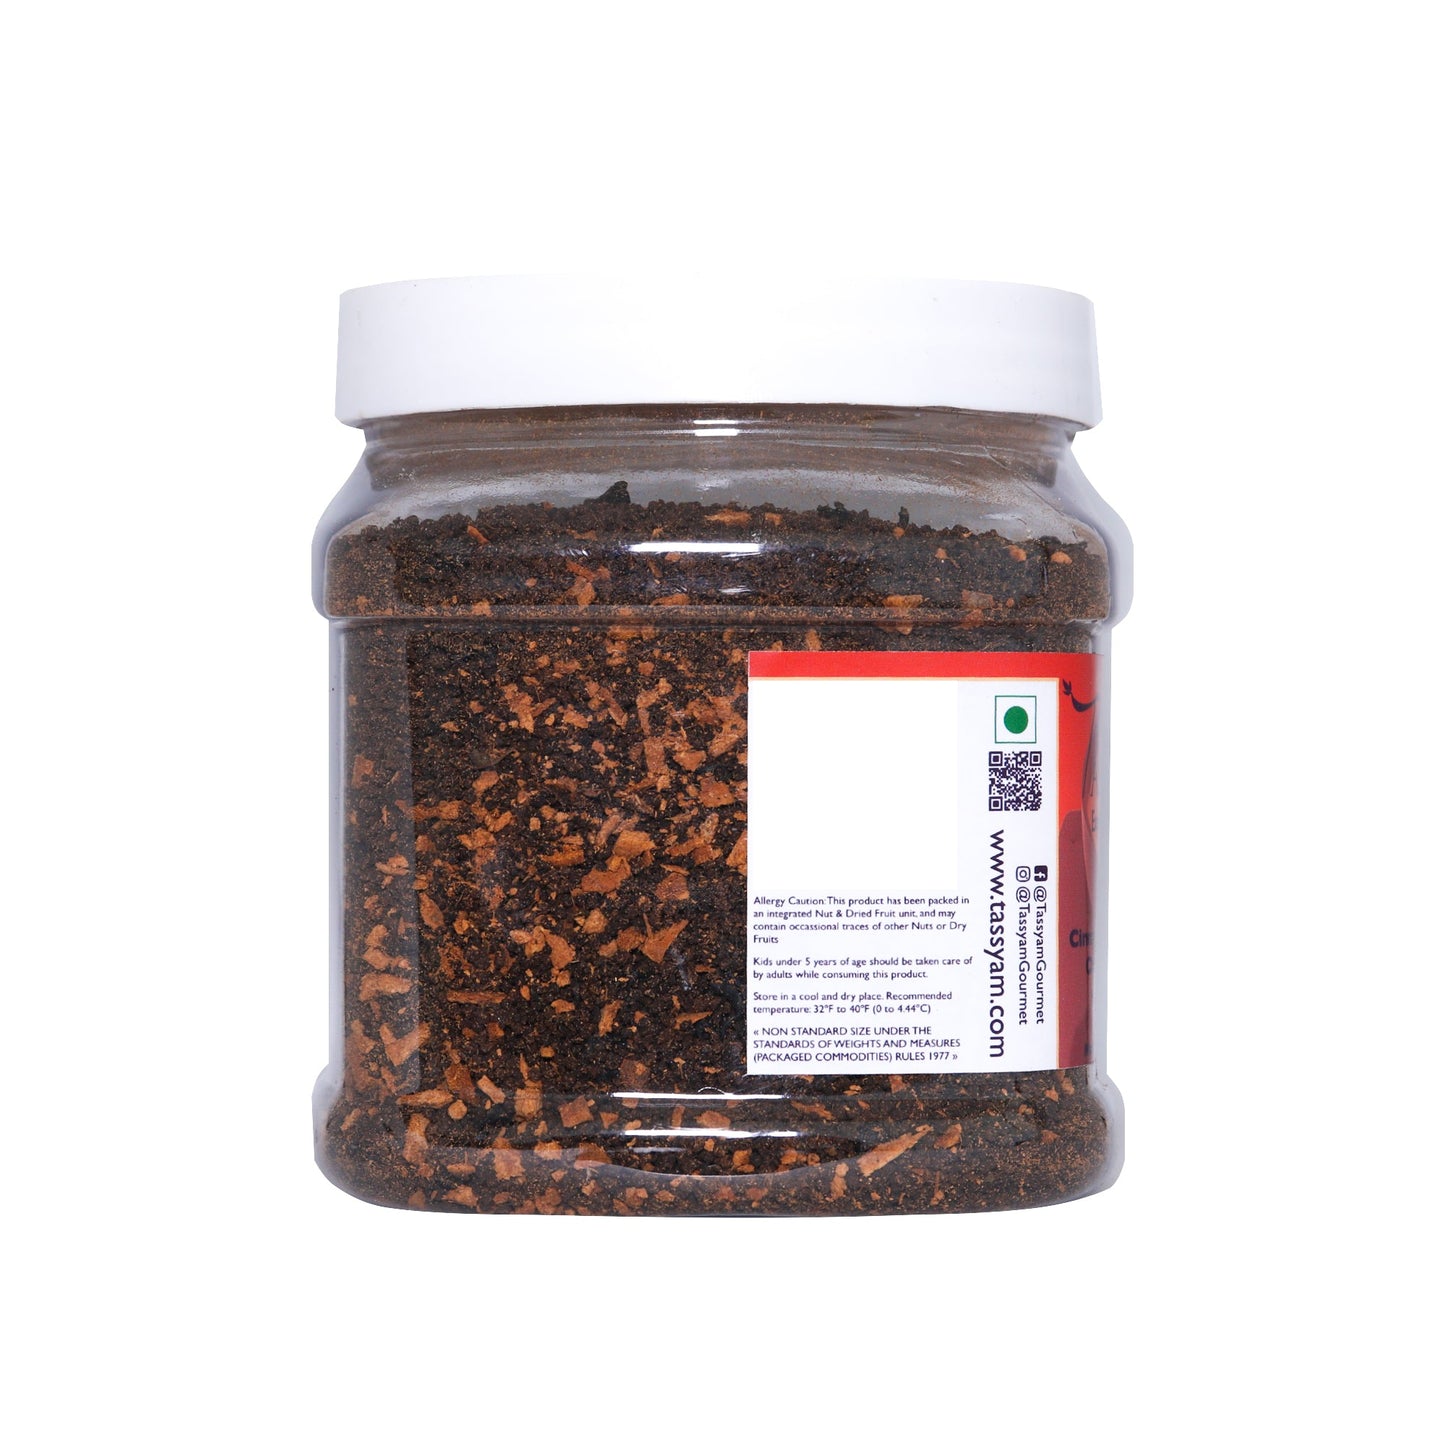 Strong Assam Cinnamon - Tassyam Organics